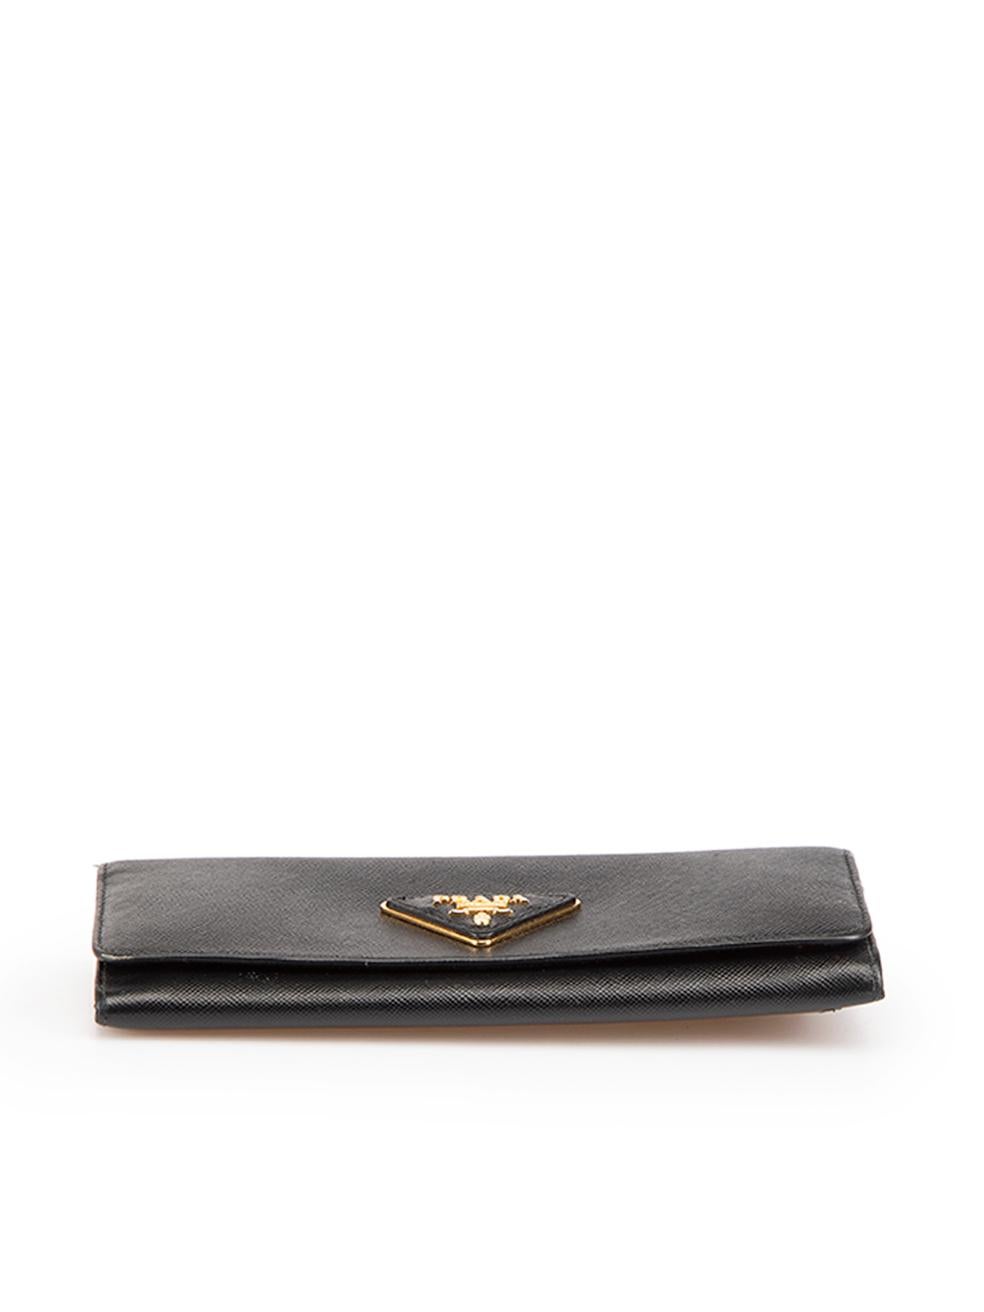 Women's Prada Black Leather Saffiano Long Wallet